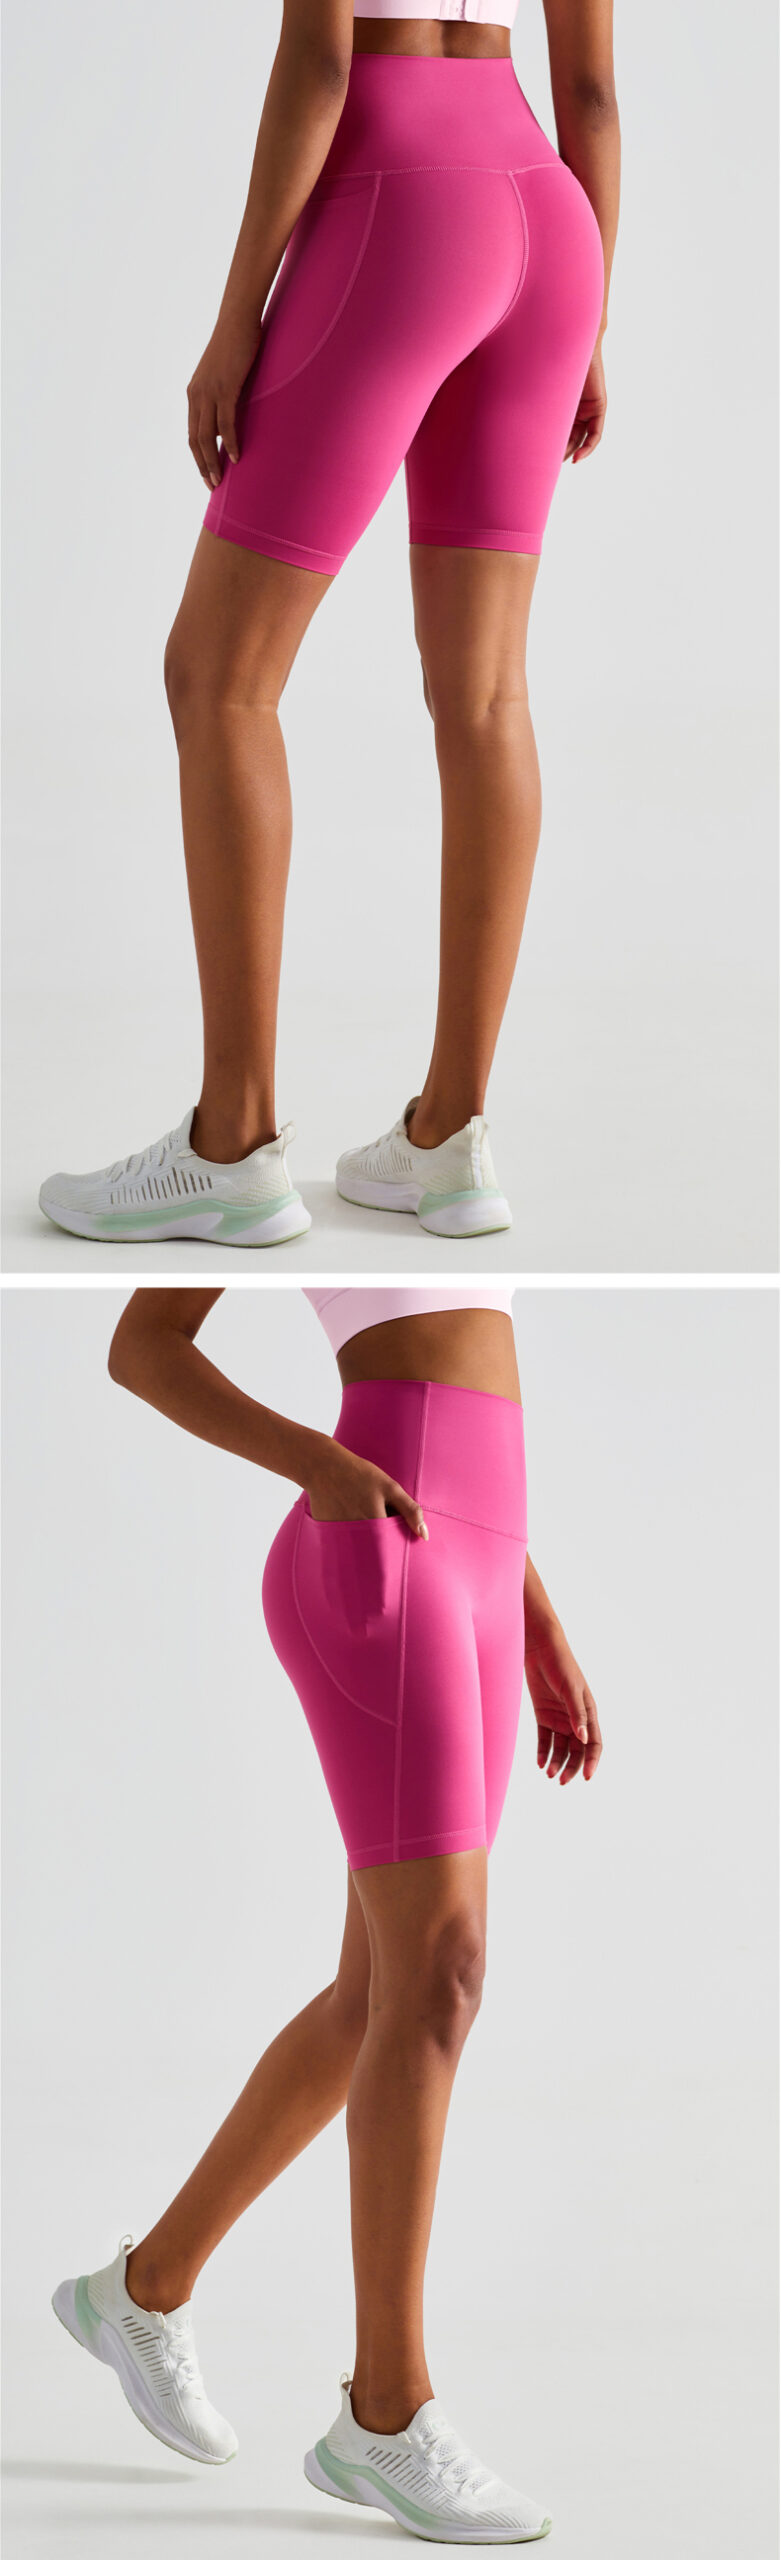 Vnazvnasi 2023 Hot Sale Fitness Female Full Length Leggings 19 Colors  Running Pants Comfortable And Formfitting Yoga Pants